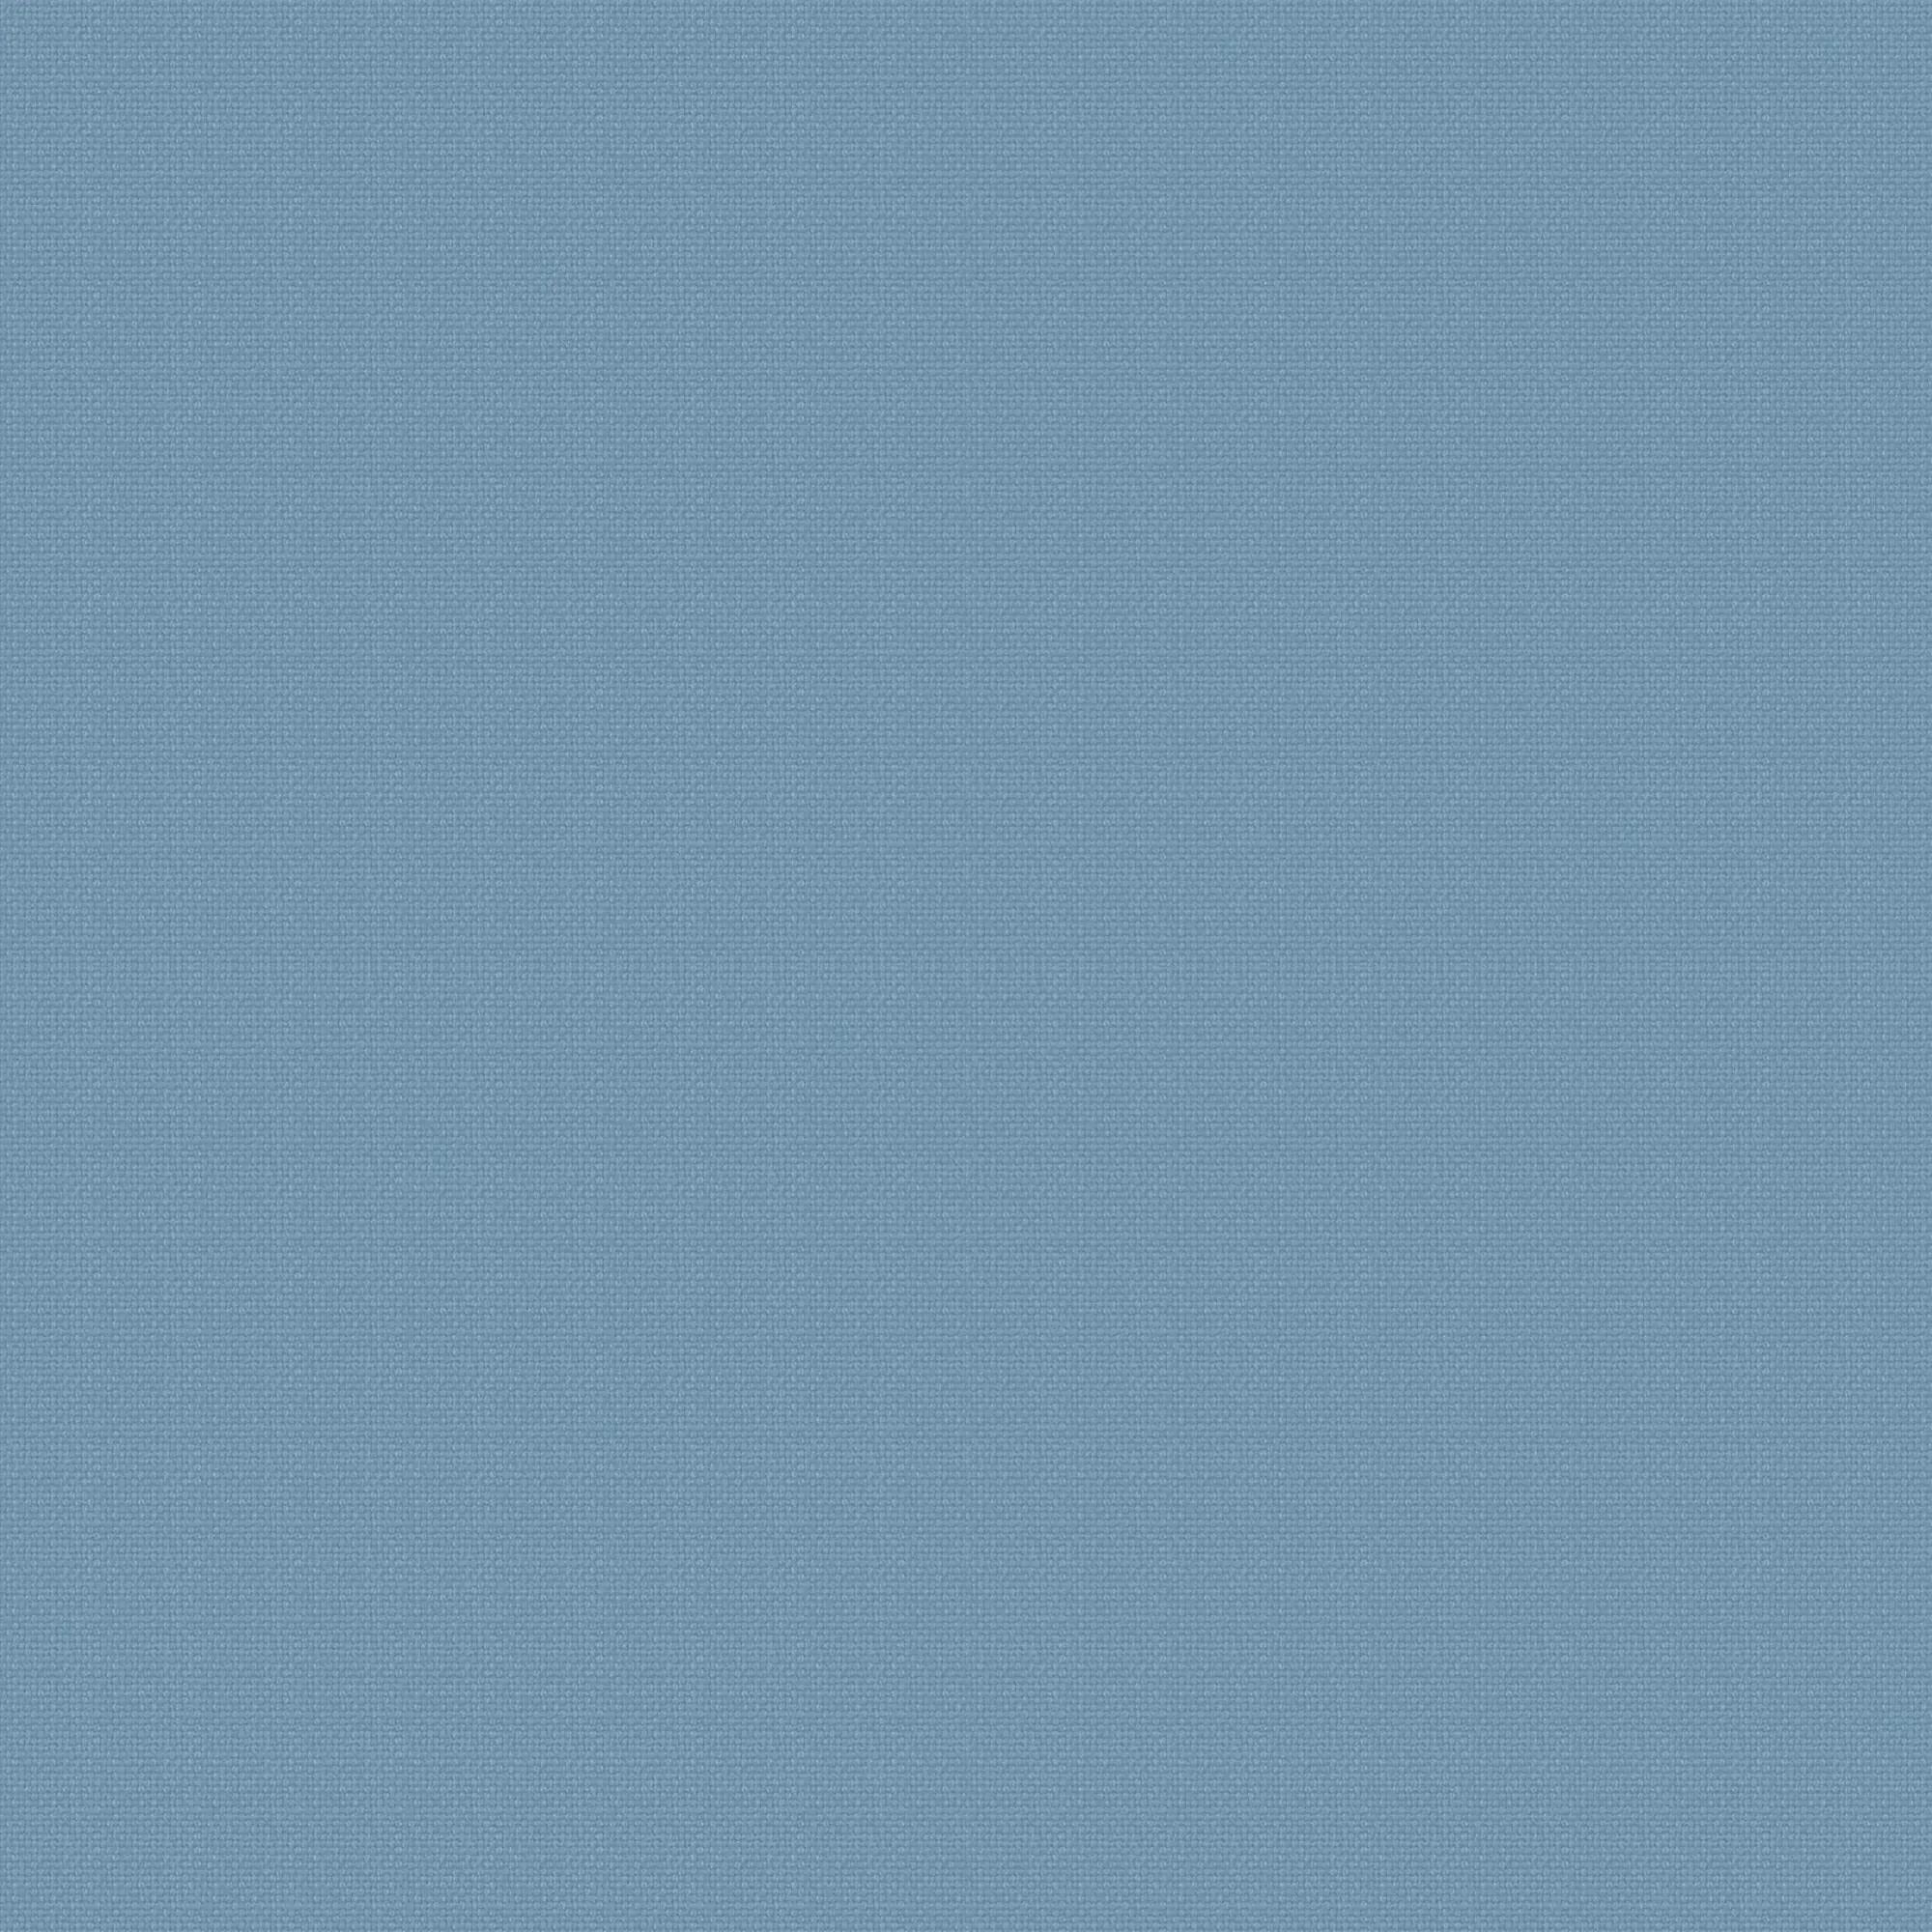 Tela al corte loneta mimos azul ancho 280 cm